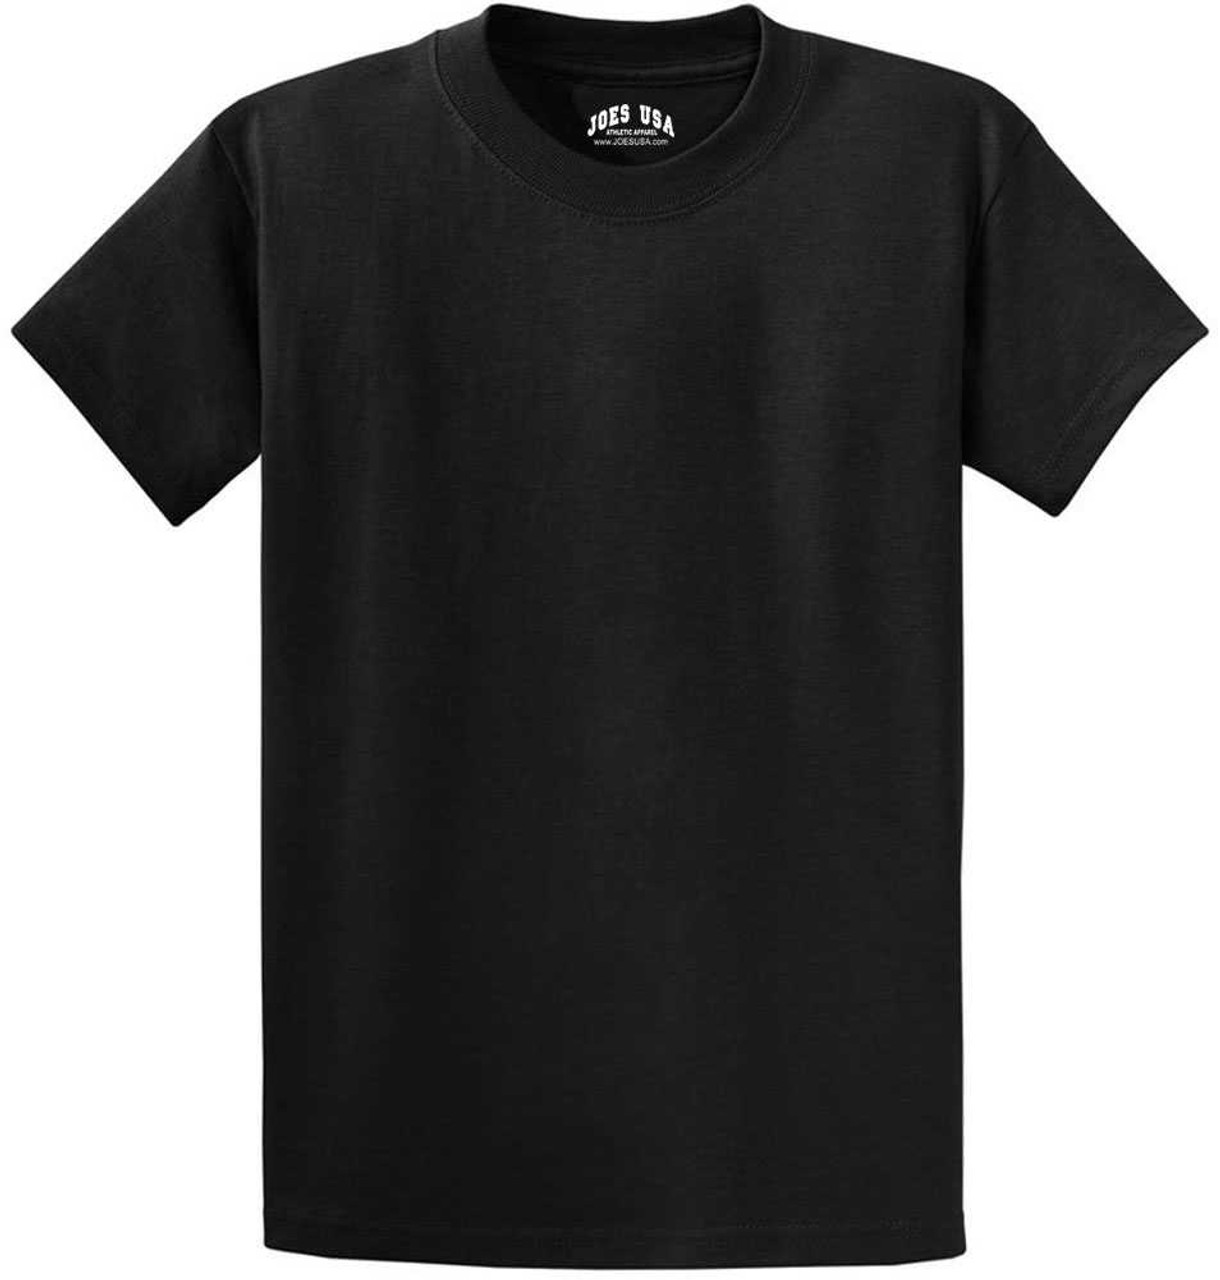 Fruit of the Loom Men's Lightweight Cotton Crew T-Shirt Multipack, Black 4  Pack, Medium